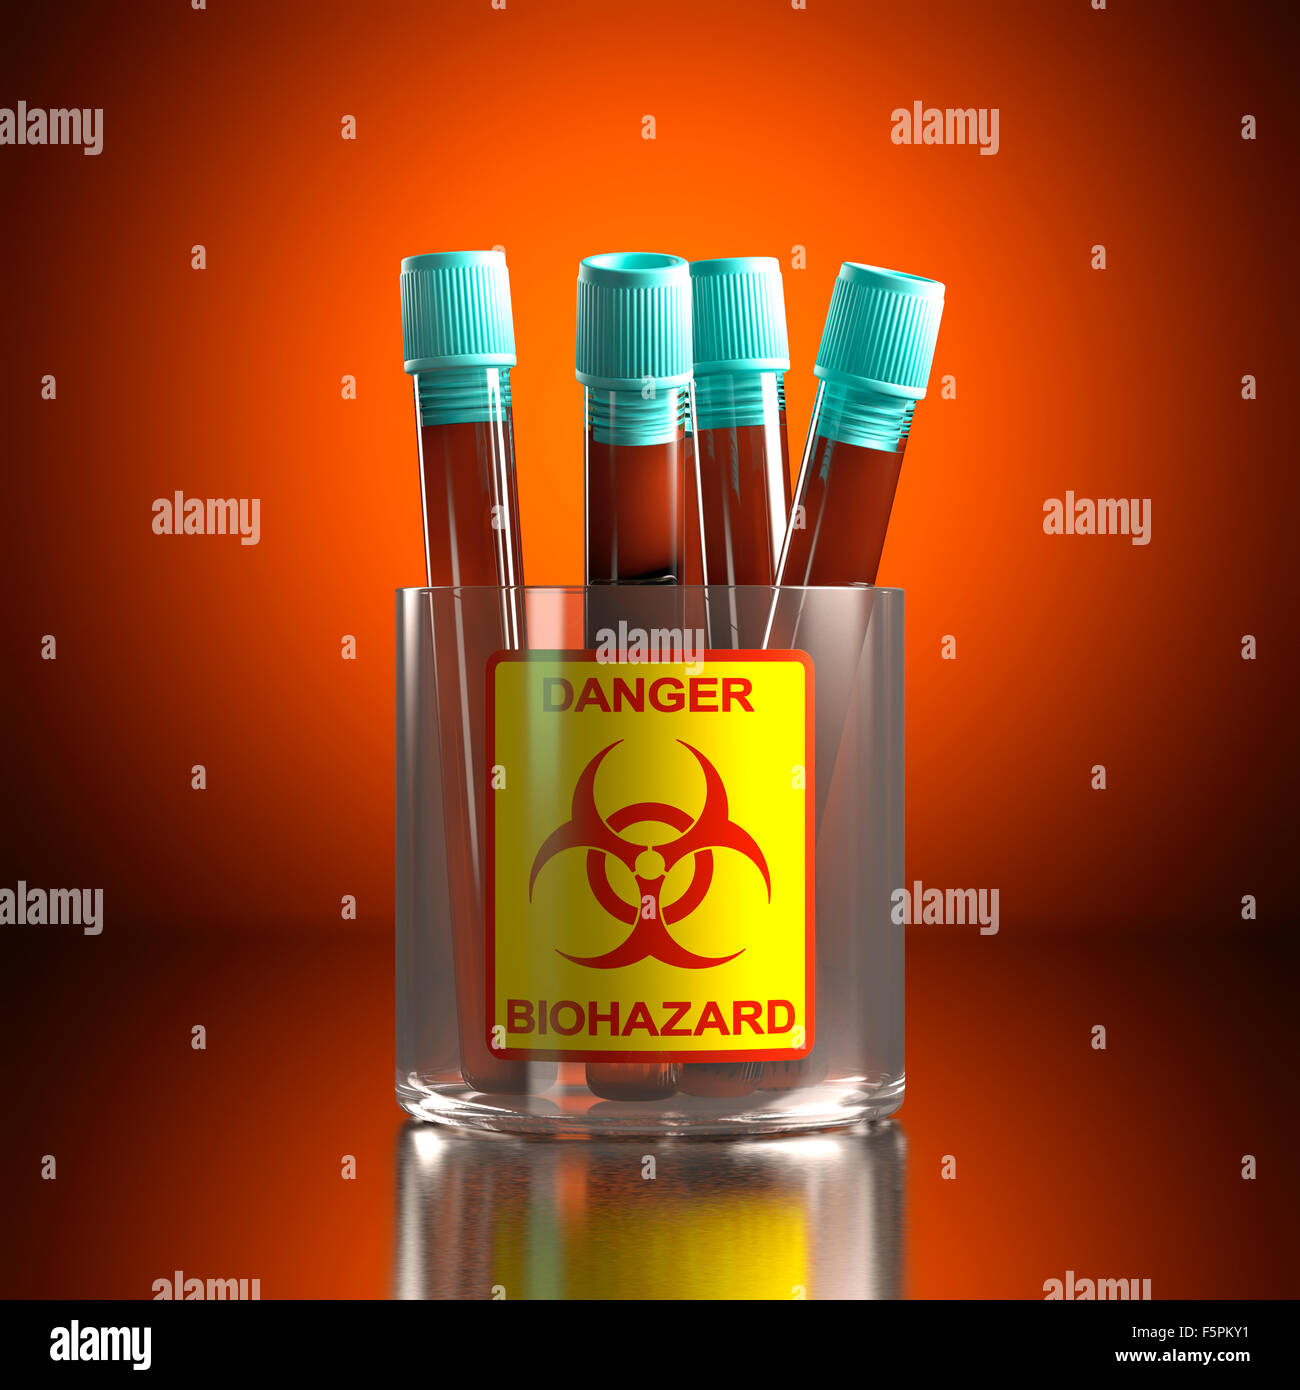 Test tube with contaminated blood, illustration, Stock Photo